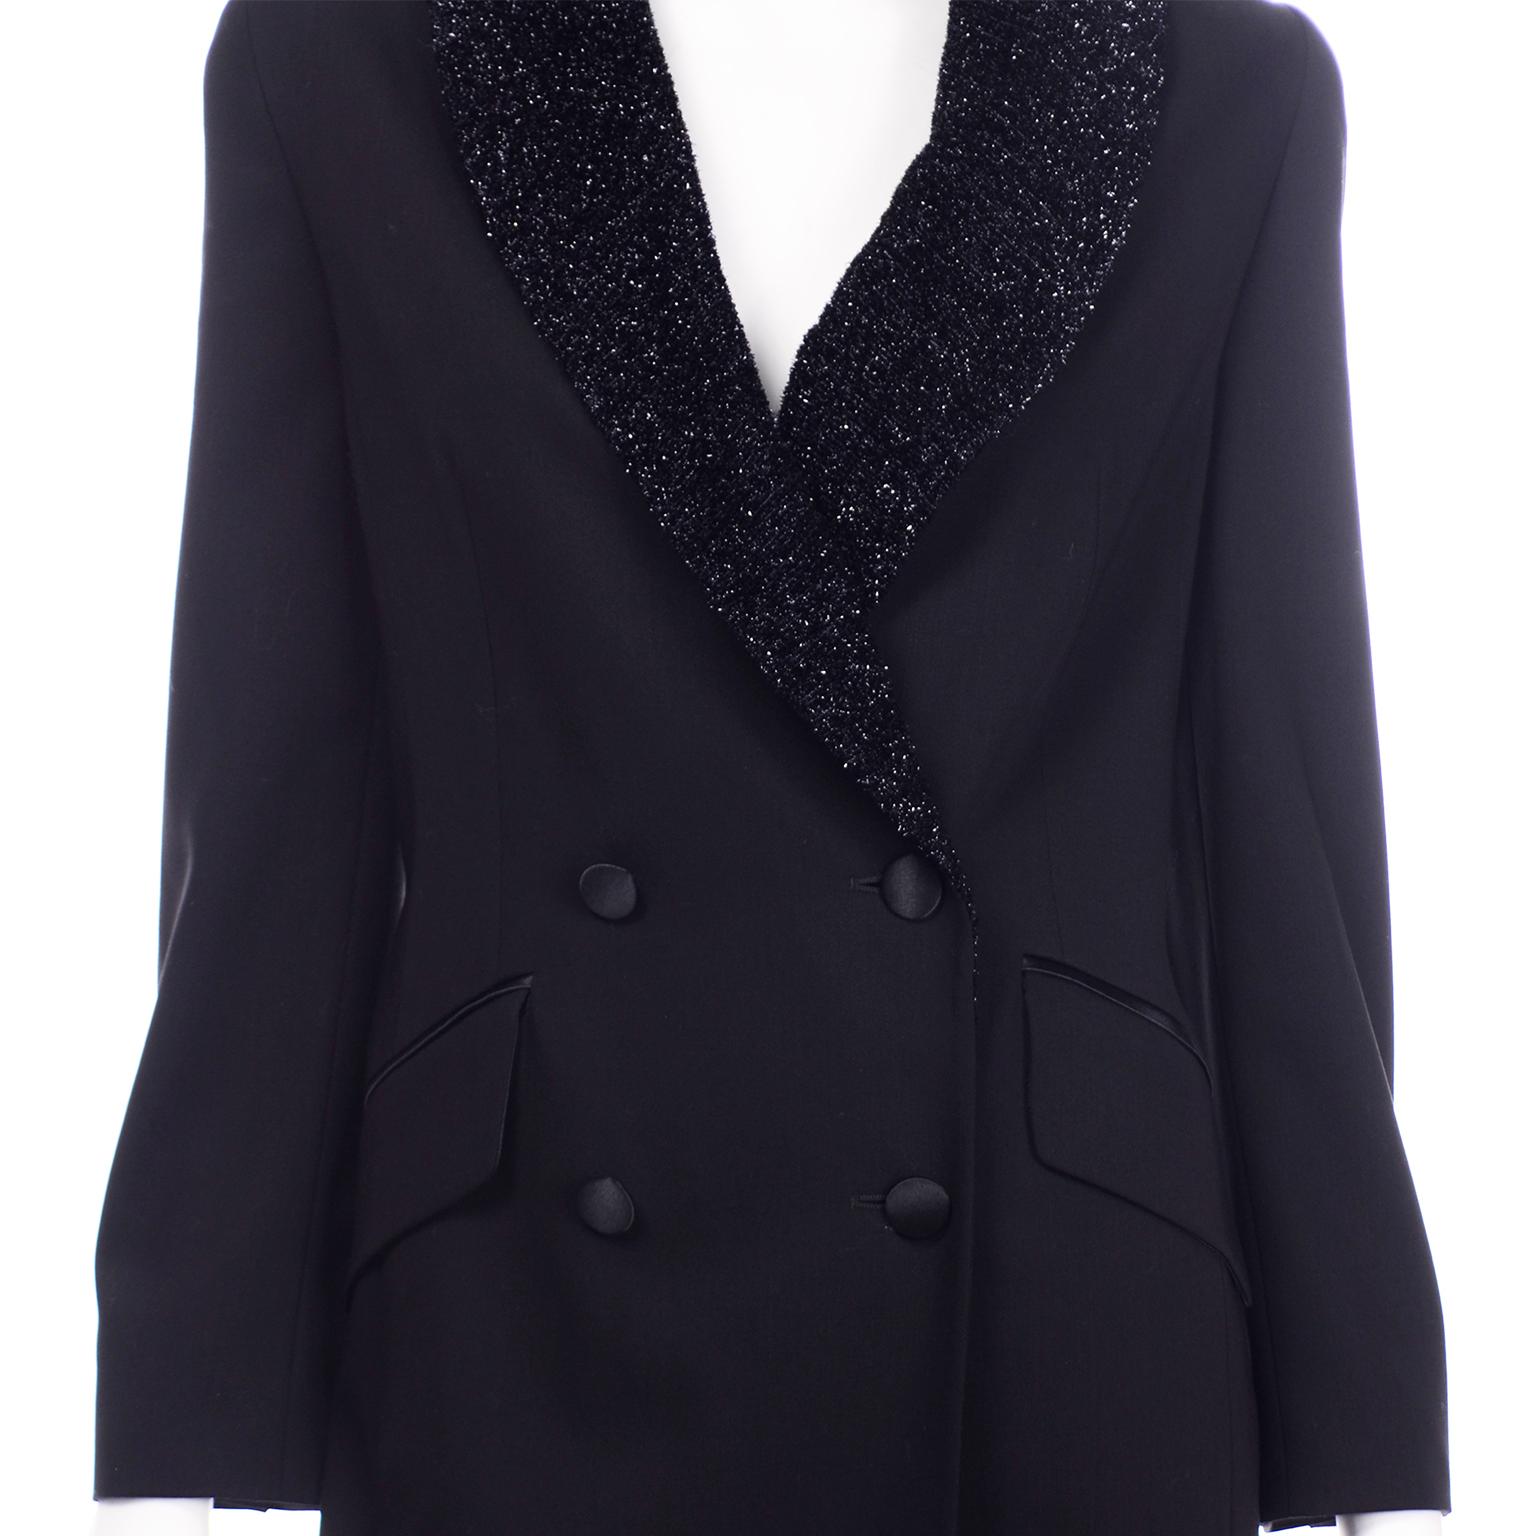 Vintage Louis Feraud Black Blazer Style Evening Coat w Sparkle Fuzzy Lapels 1